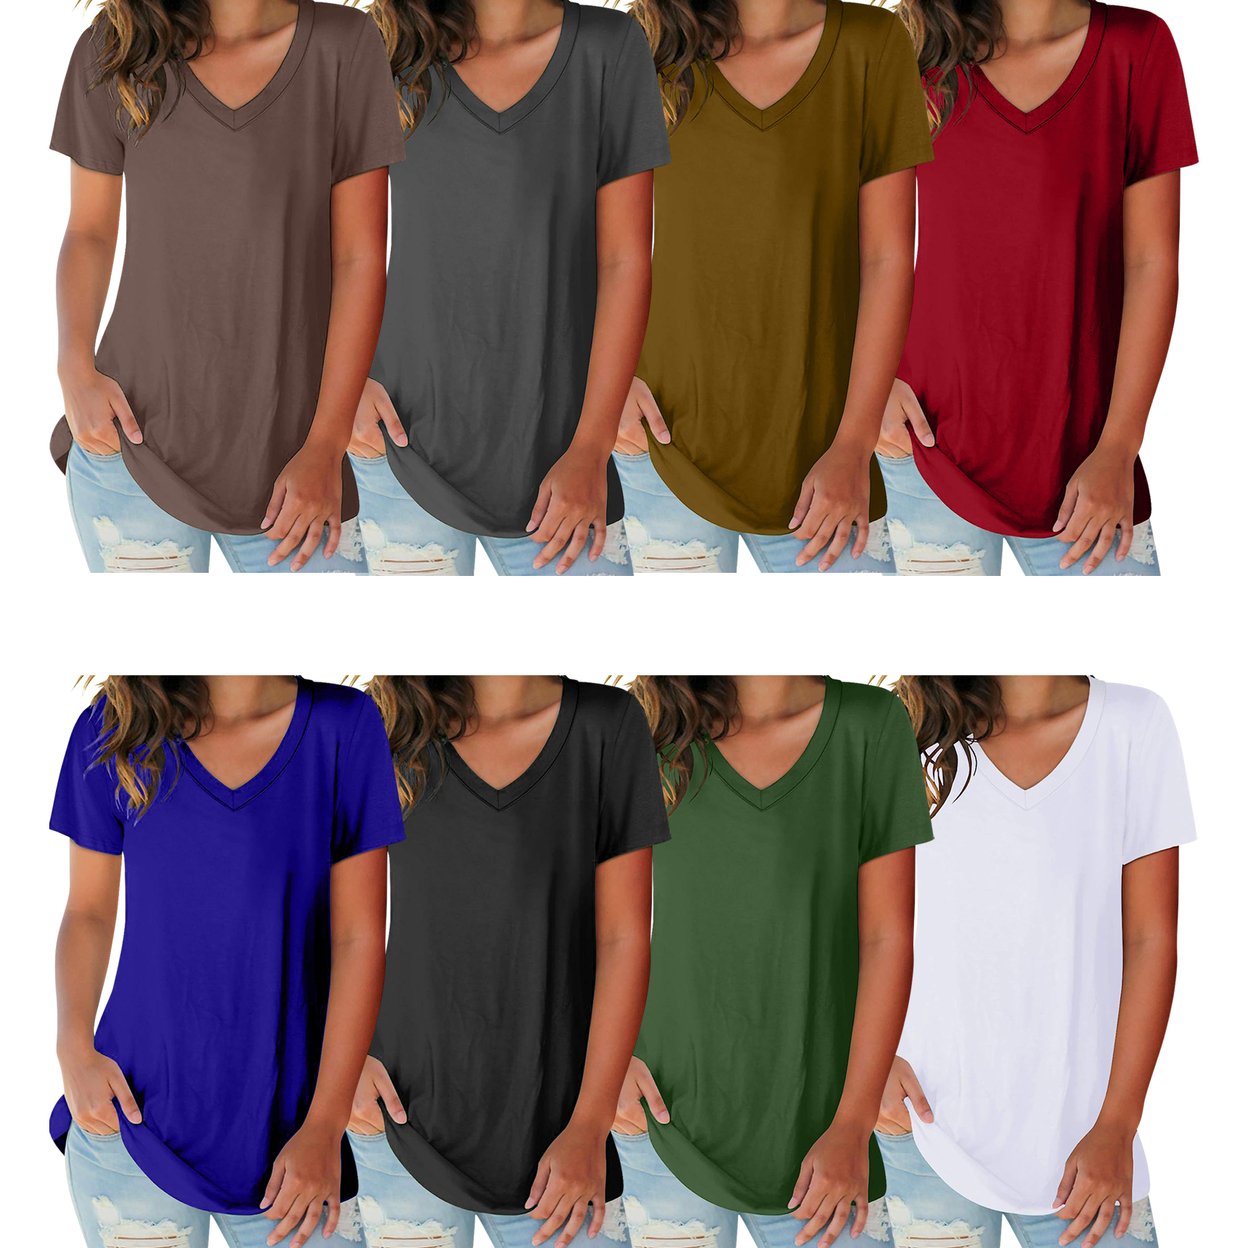 3-Pack: Women's Ultra Soft Smooth Cotton Blend Basic V-Neck Short Sleeve Shirts - Black, Navy Mustard, Small